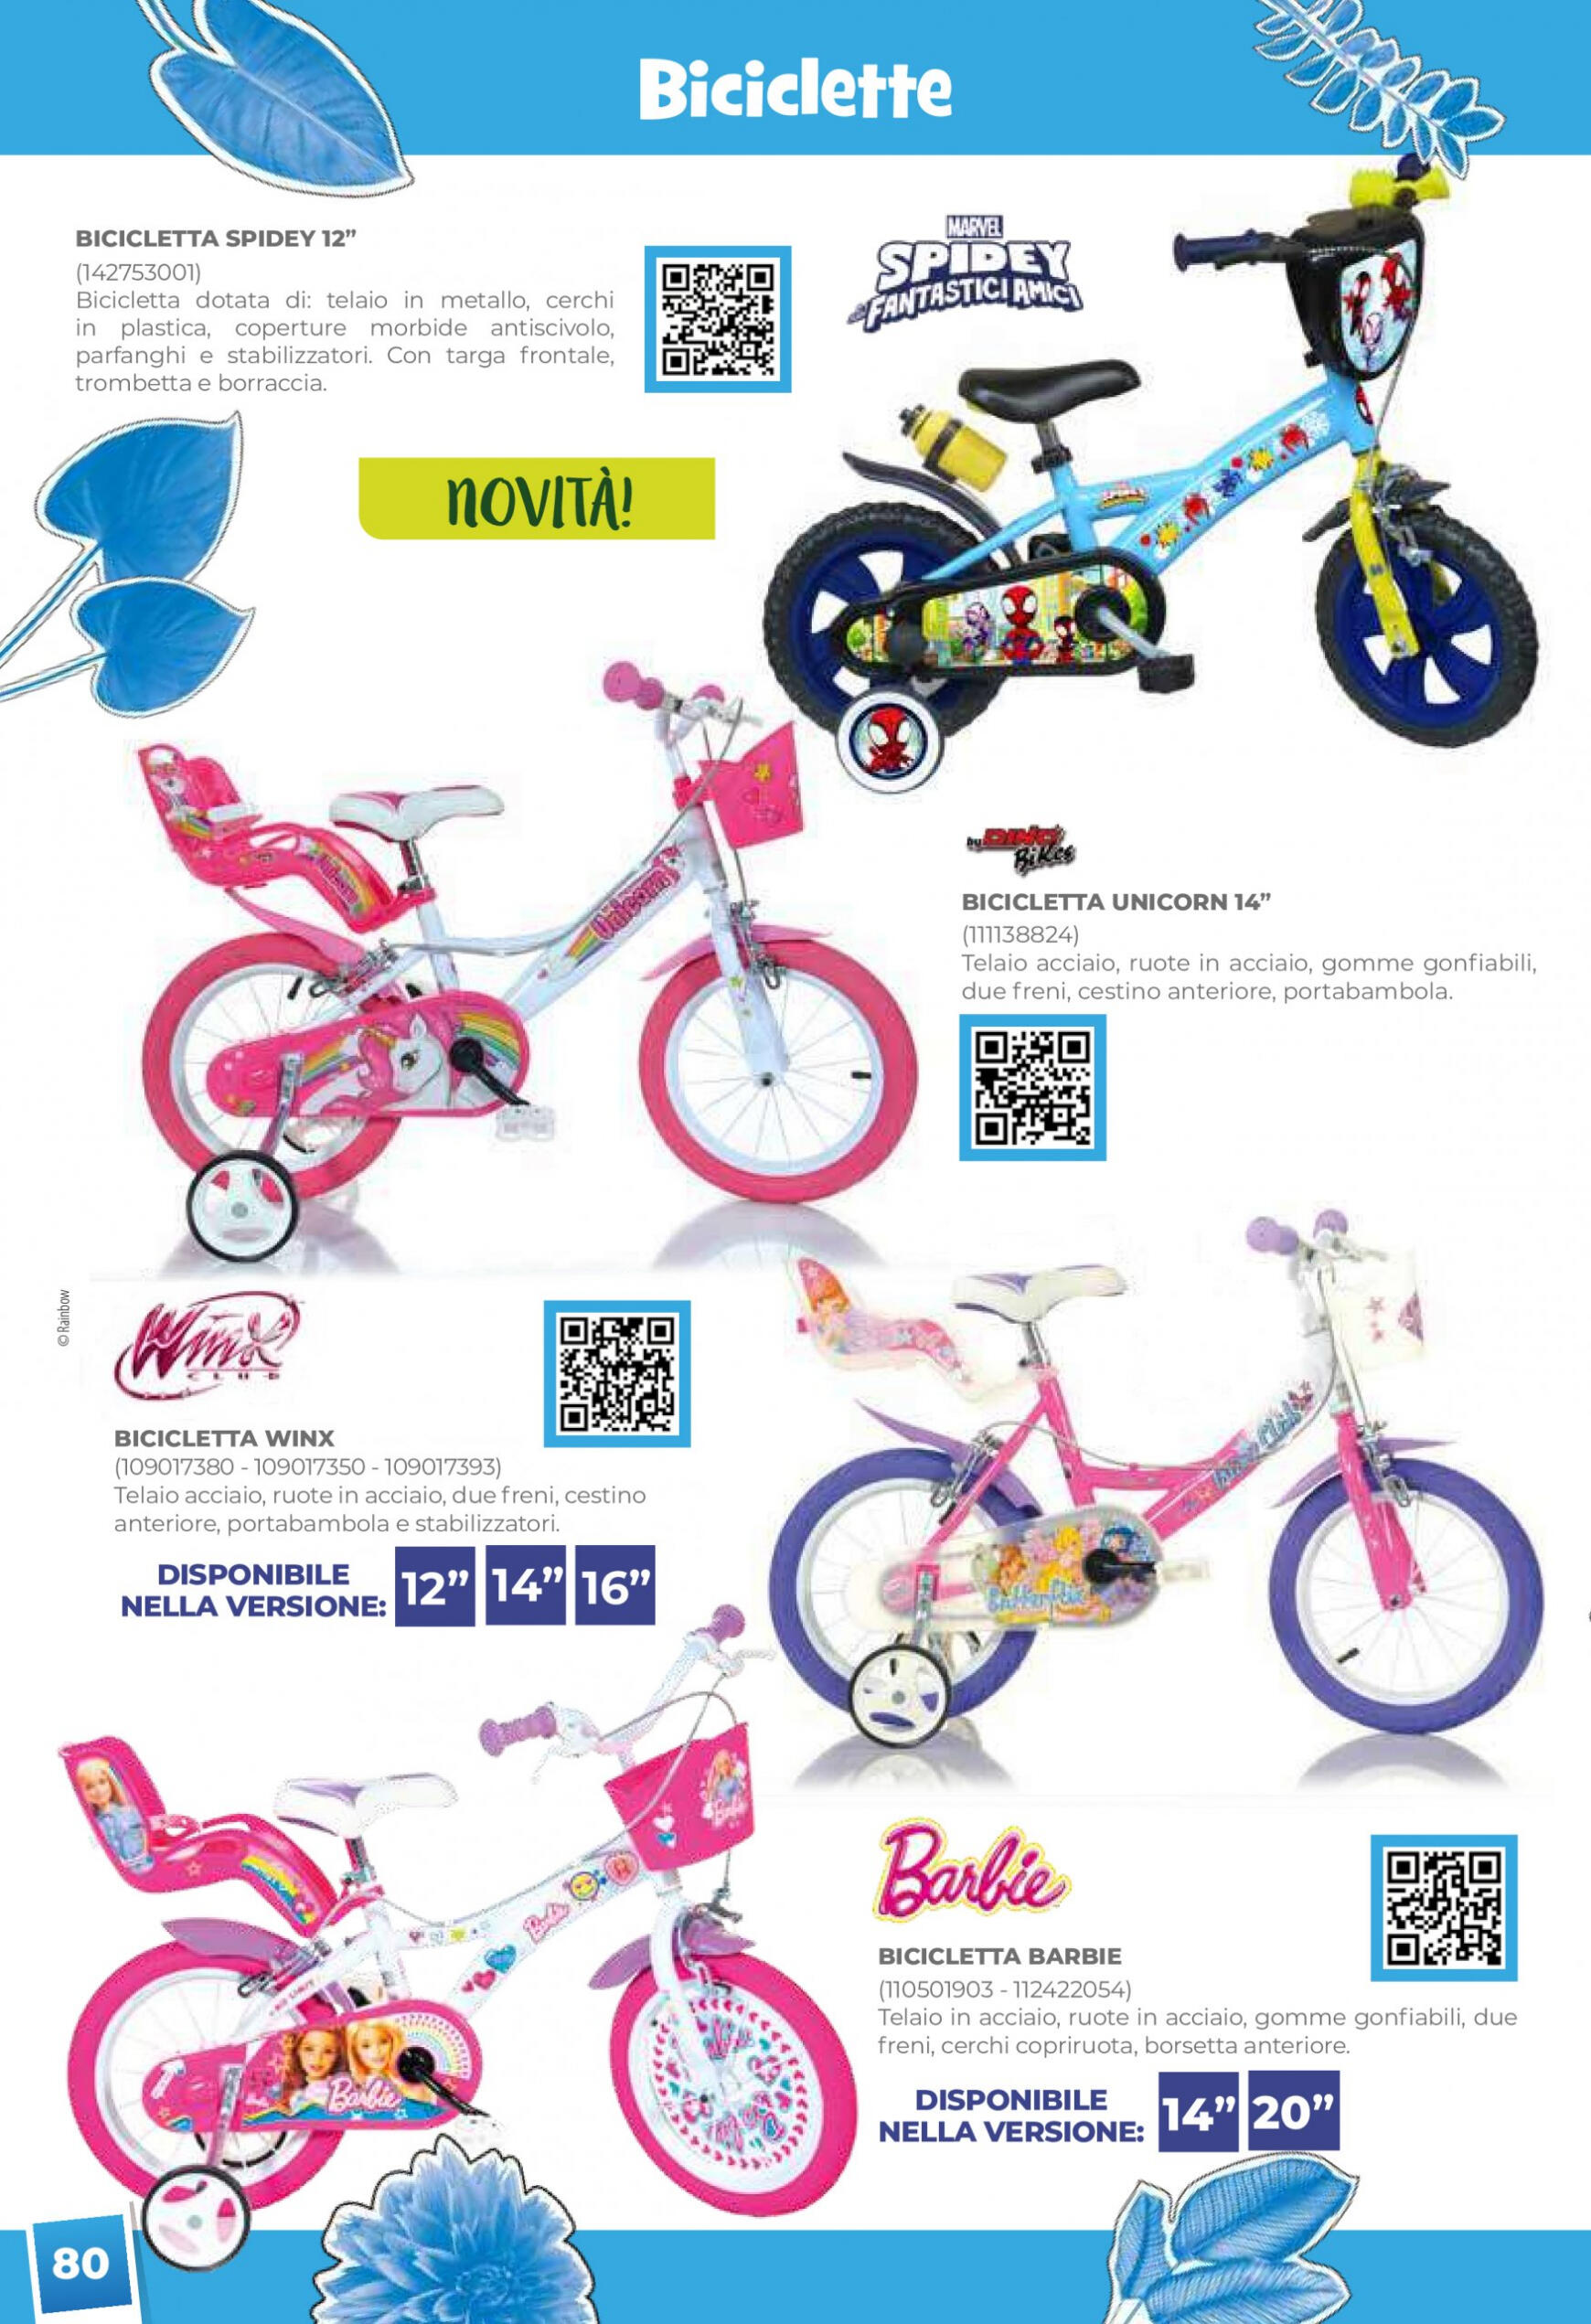 toys-center - Nuovo volantino Toys Center 01.05. - 31.12. - page: 82